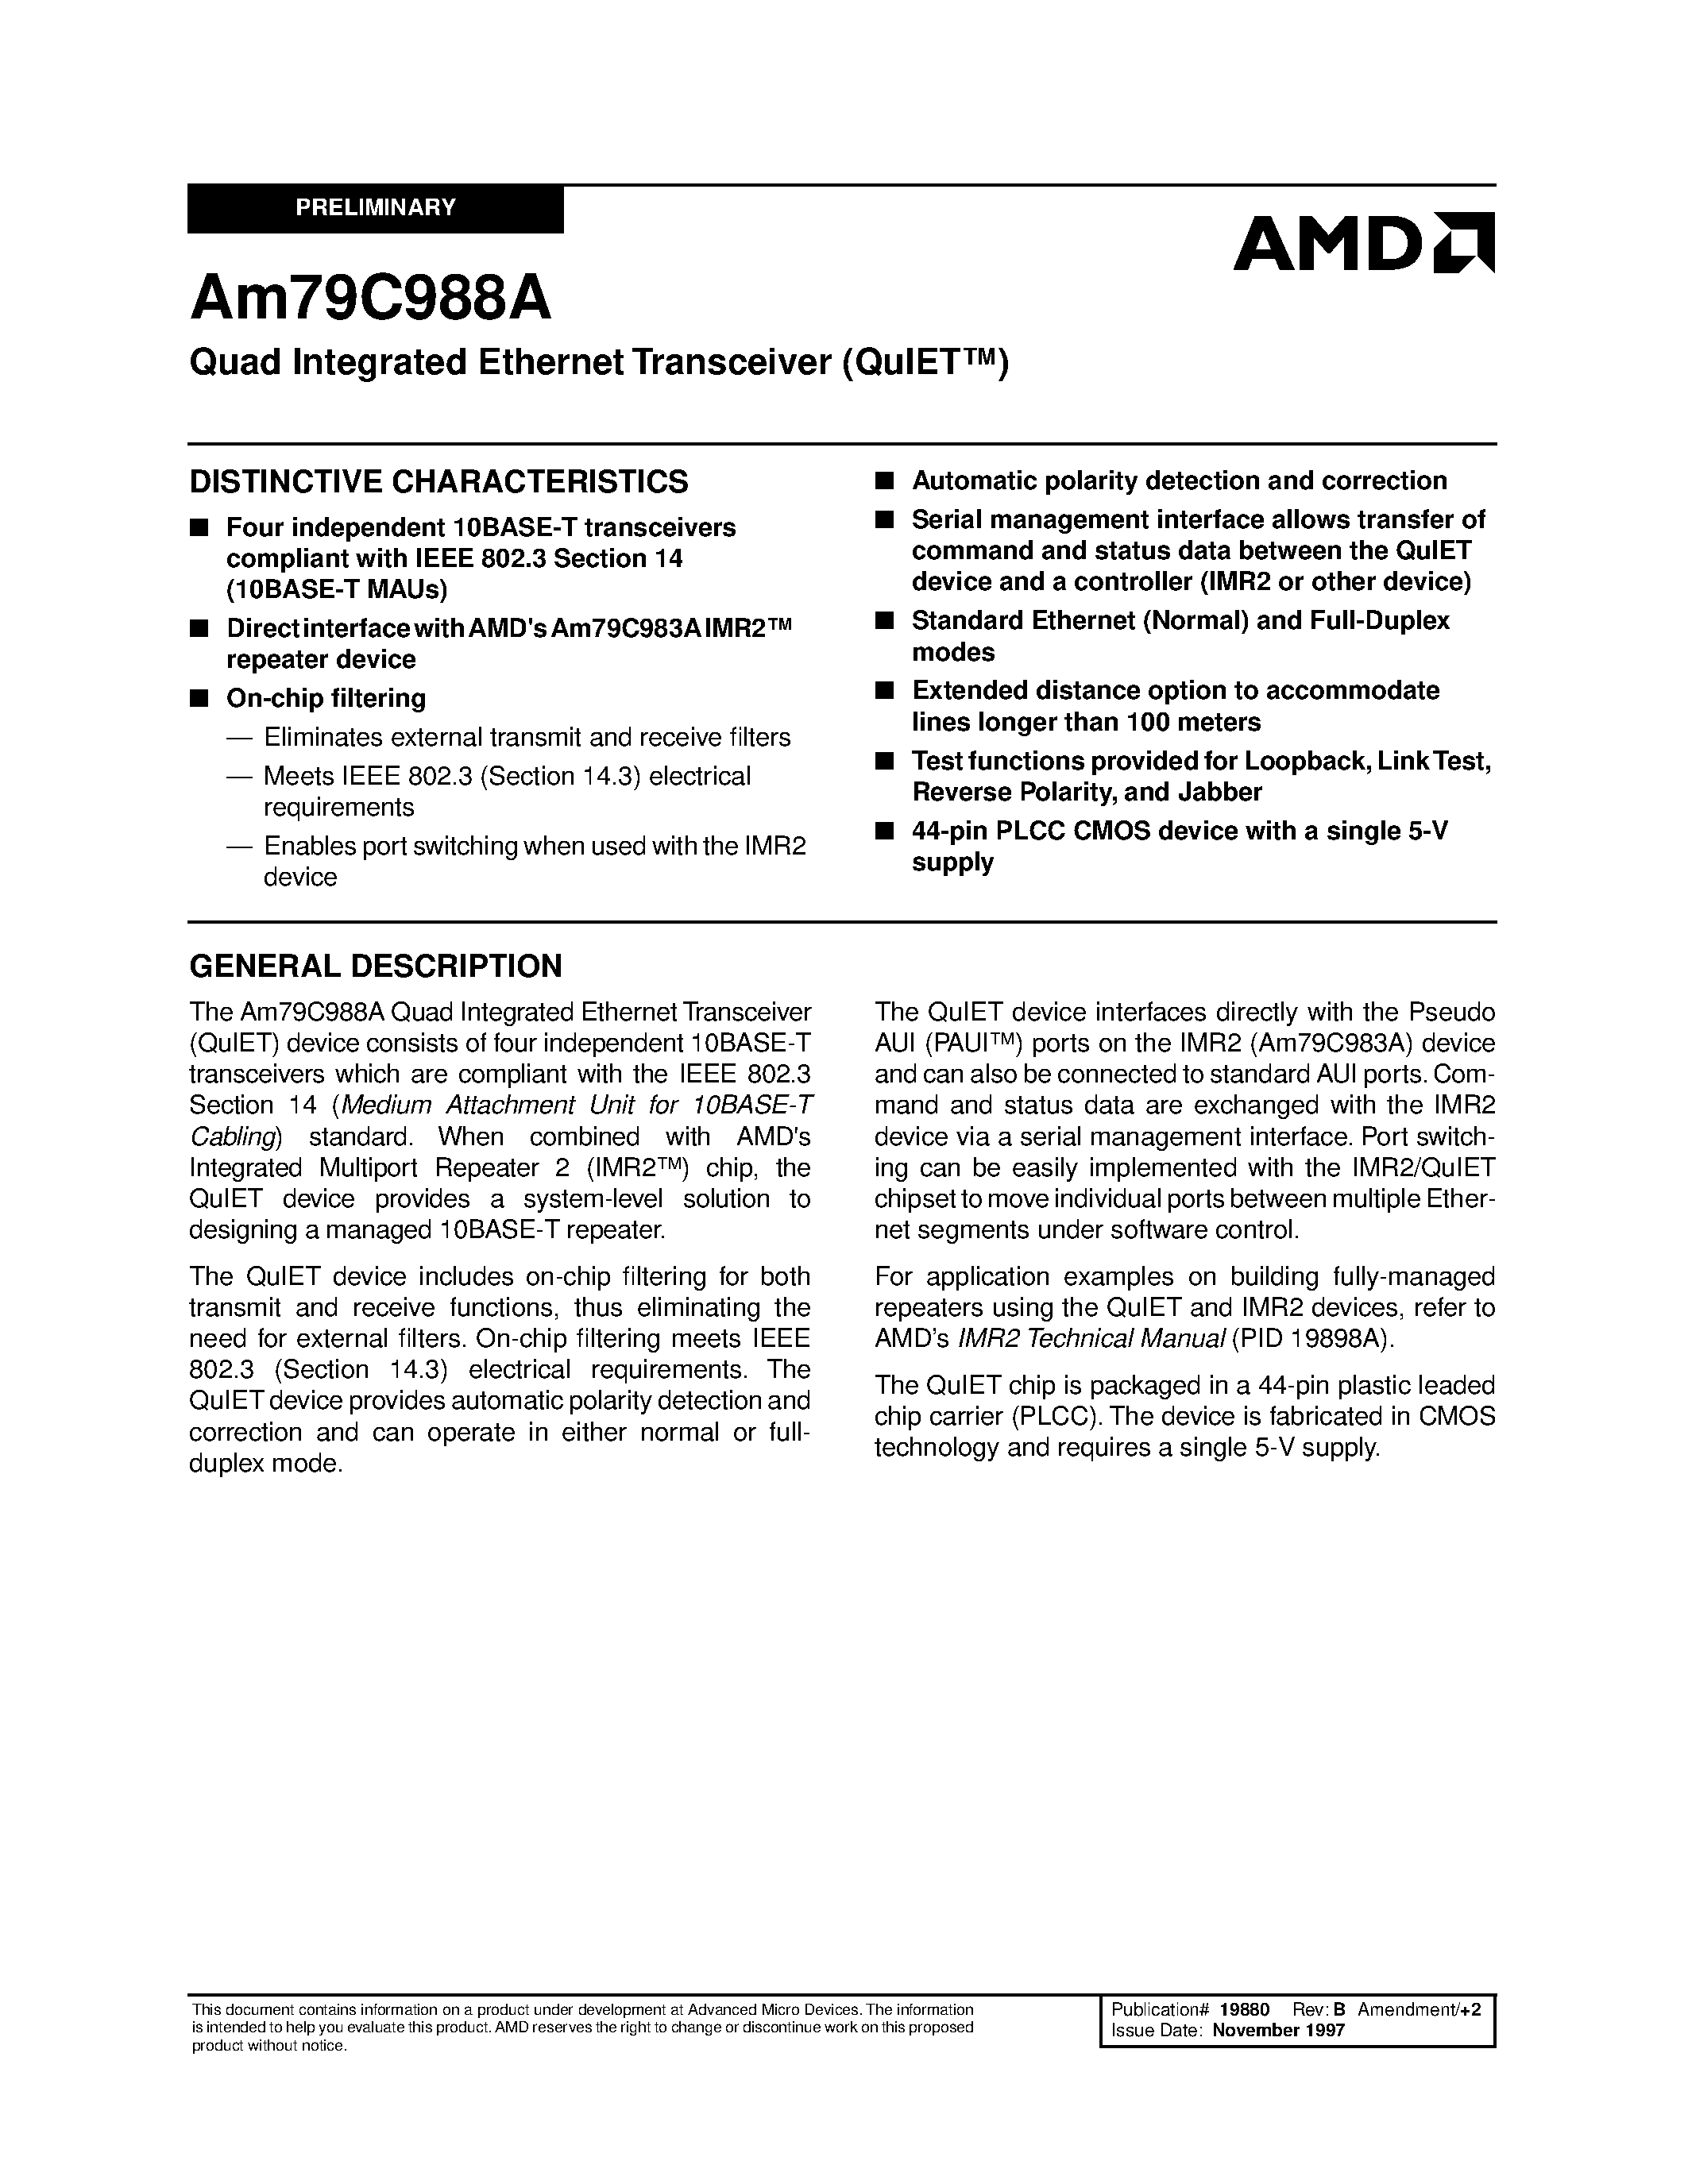 Datasheet AM79C988 - Quad Integrated Ethernet Transceiver (QuIET) page 1